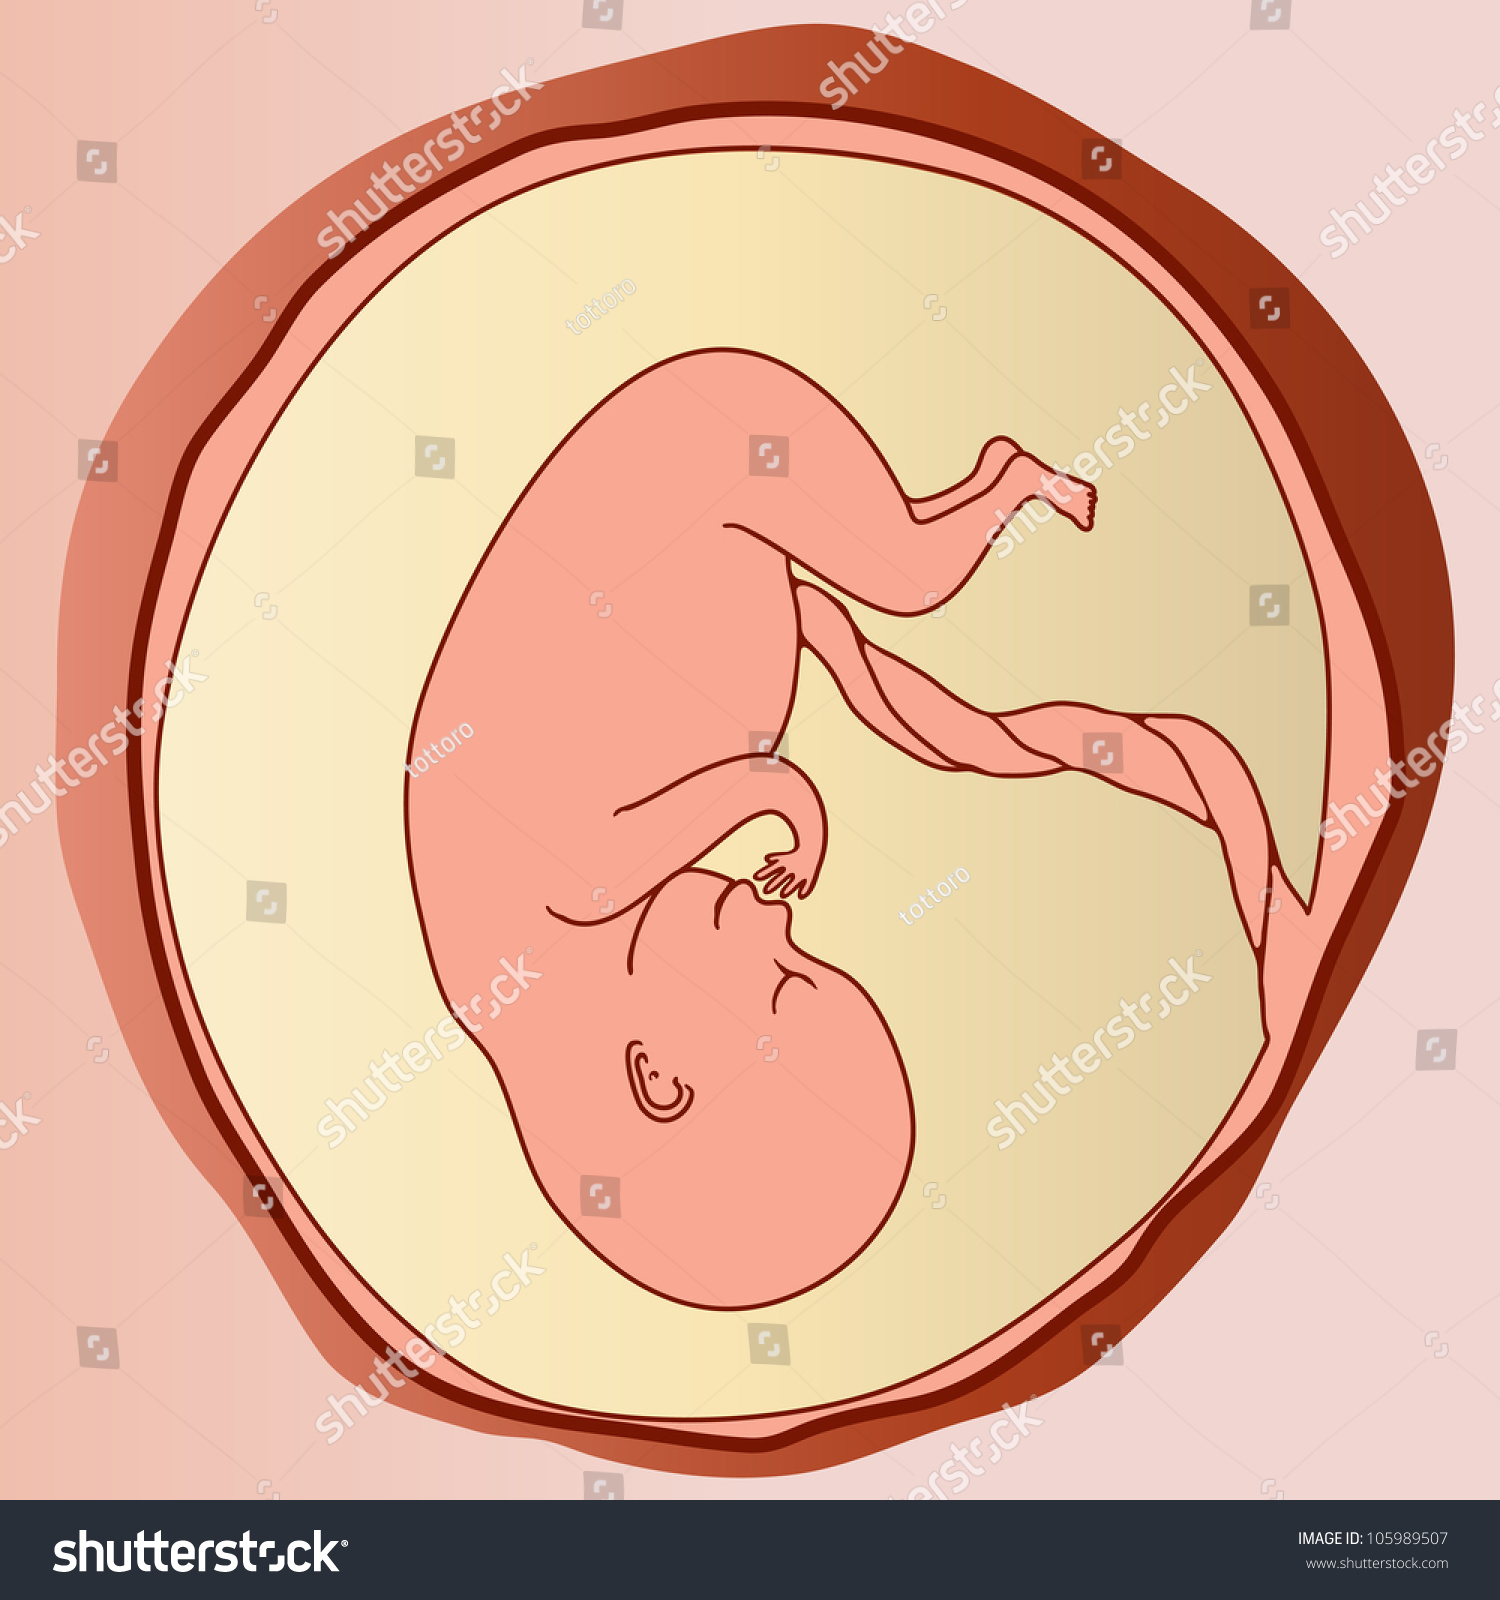 Эмбрион схематично